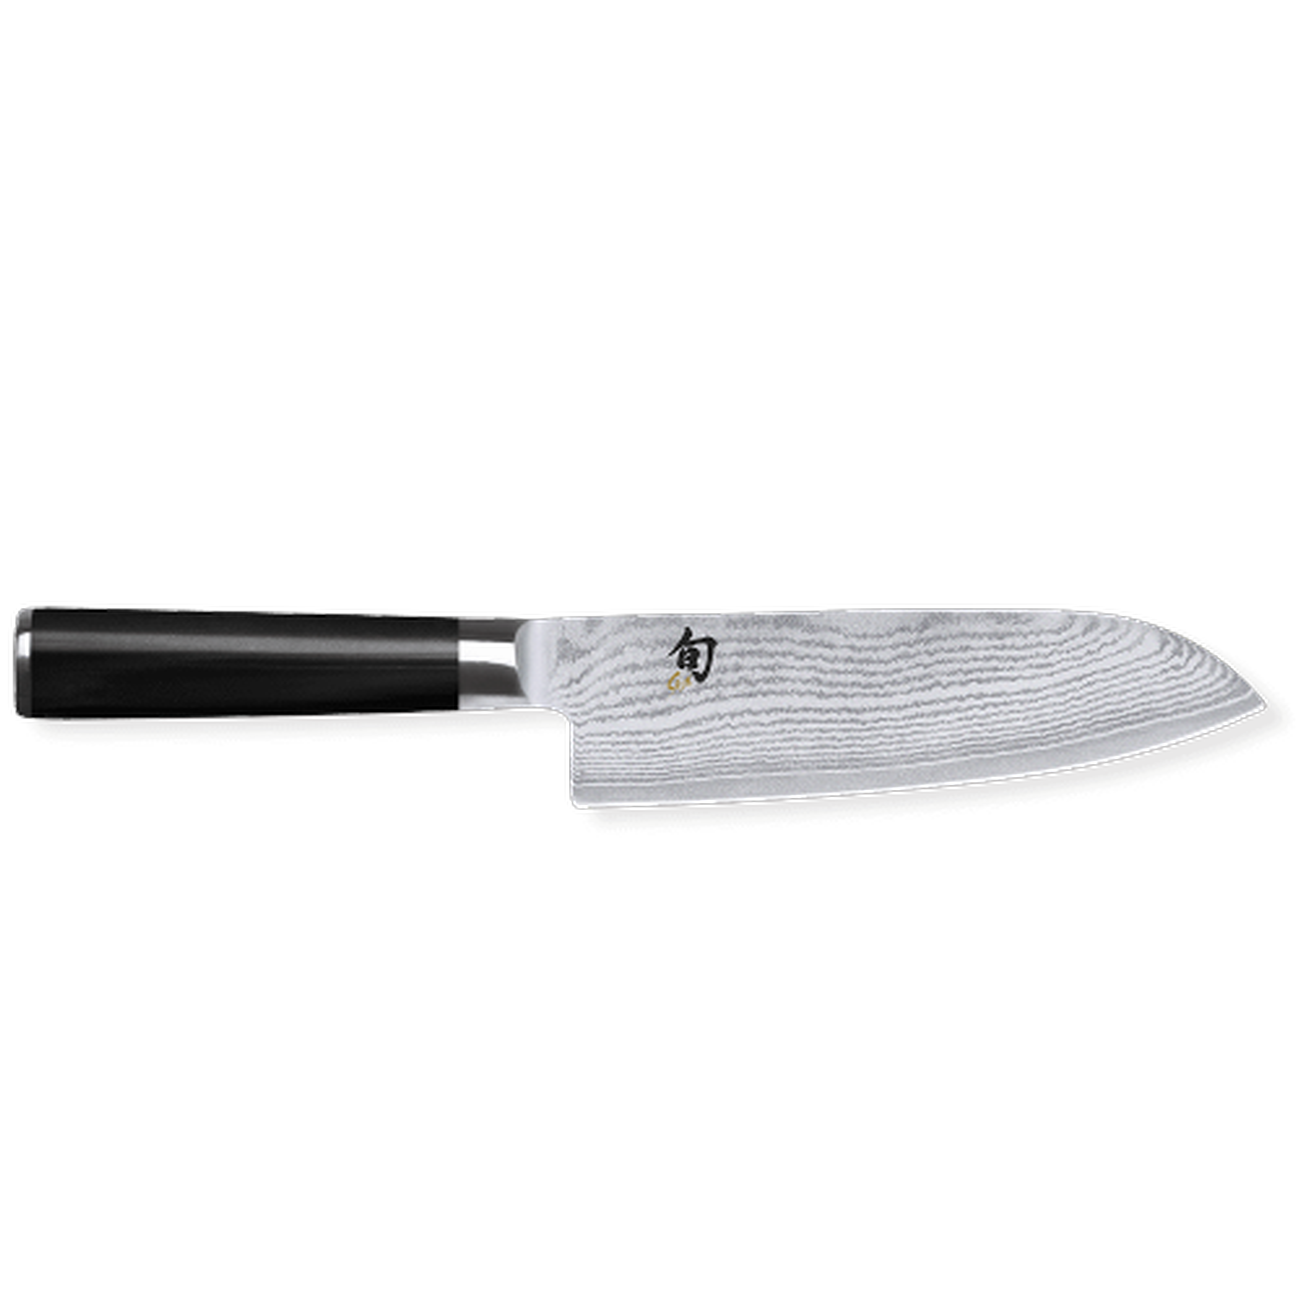 kai-shun-classic-santoku-knife-7in-18cm - Kai Shun Classic Santoku Knife 18cm